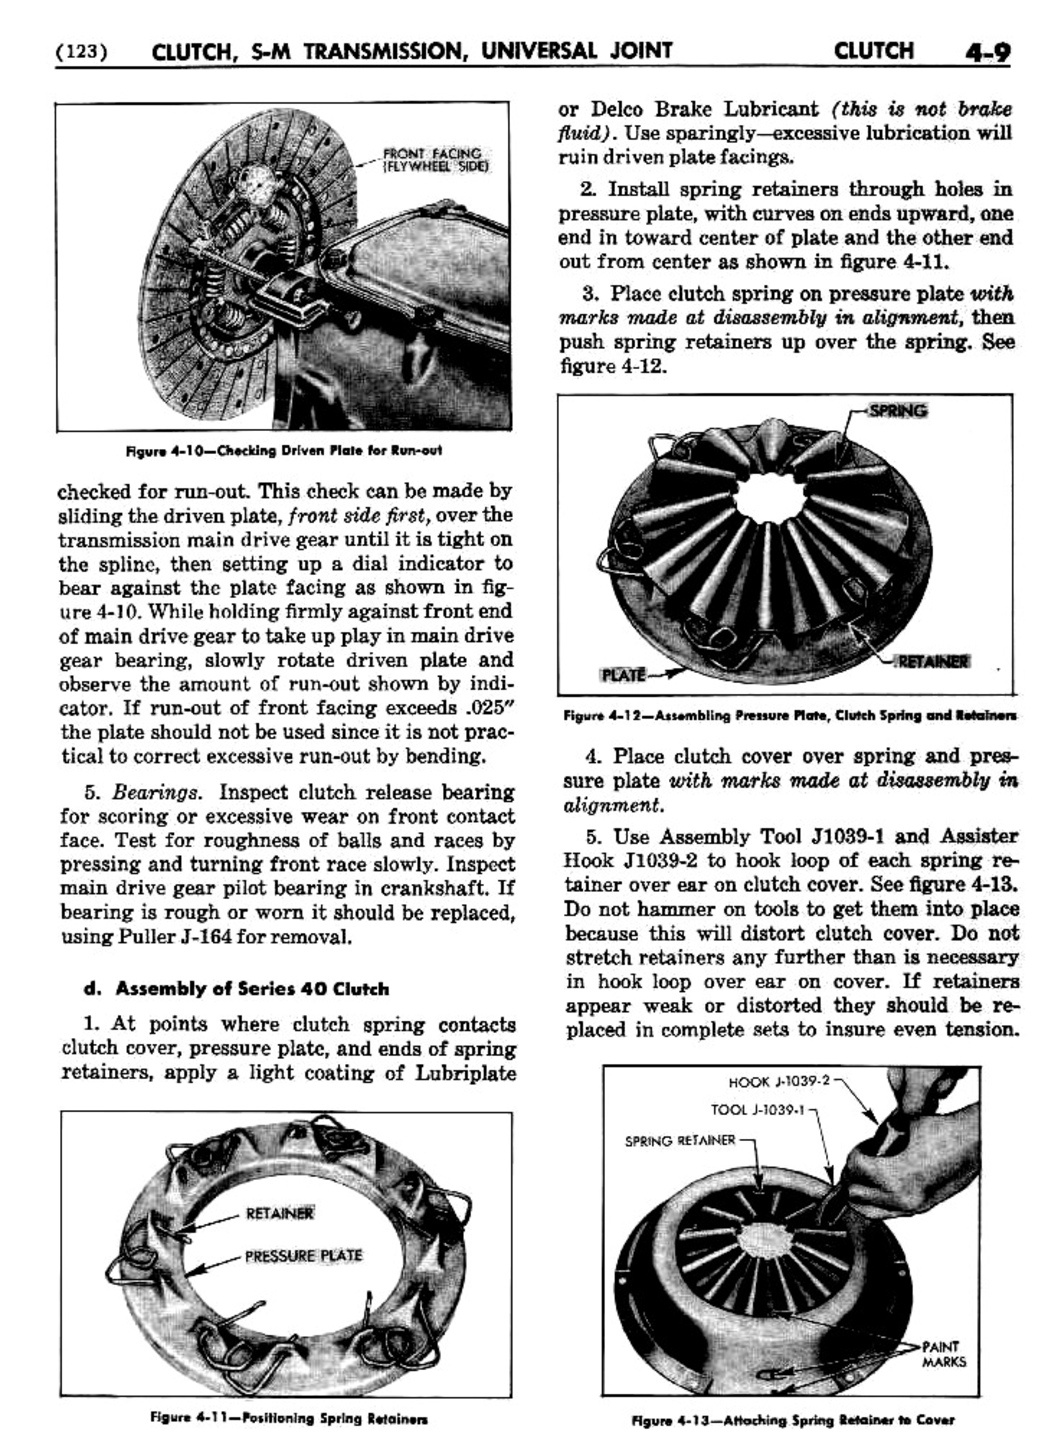 n_05 1955 Buick Shop Manual - Clutch & Trans-009-009.jpg